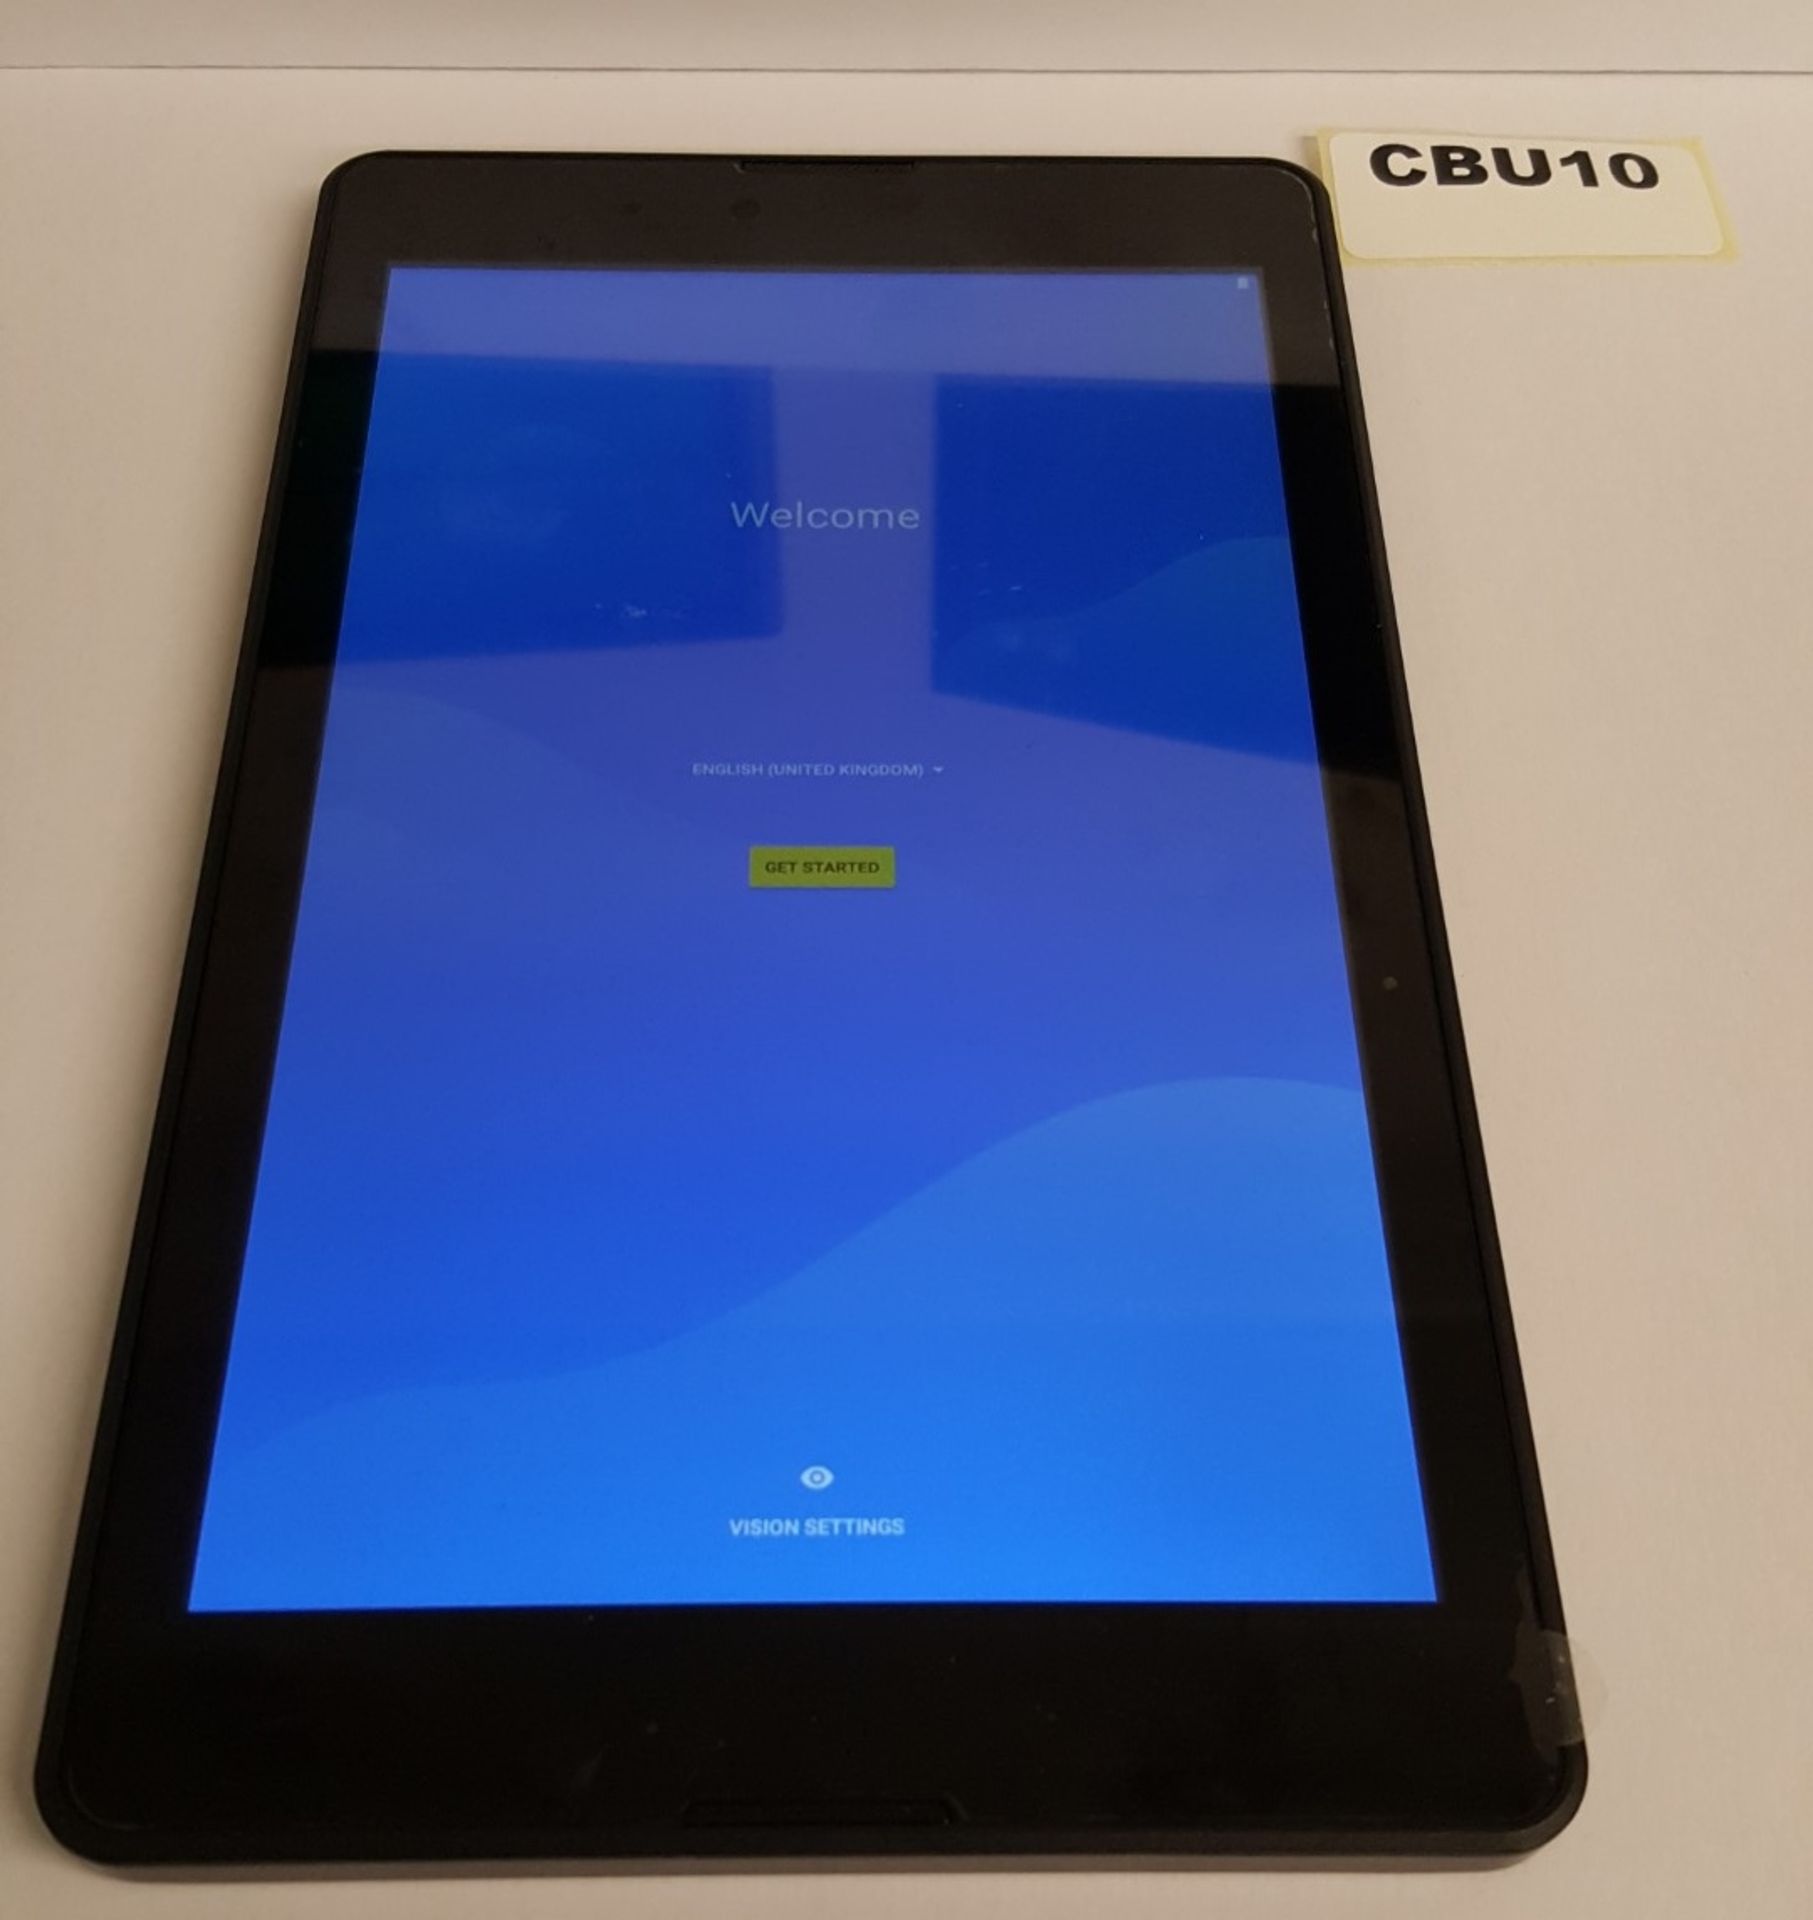 1 x Android SMB-H8009 Tablet - 16GB, WIFI, BLACK, 8.0 " - Ref CBU10